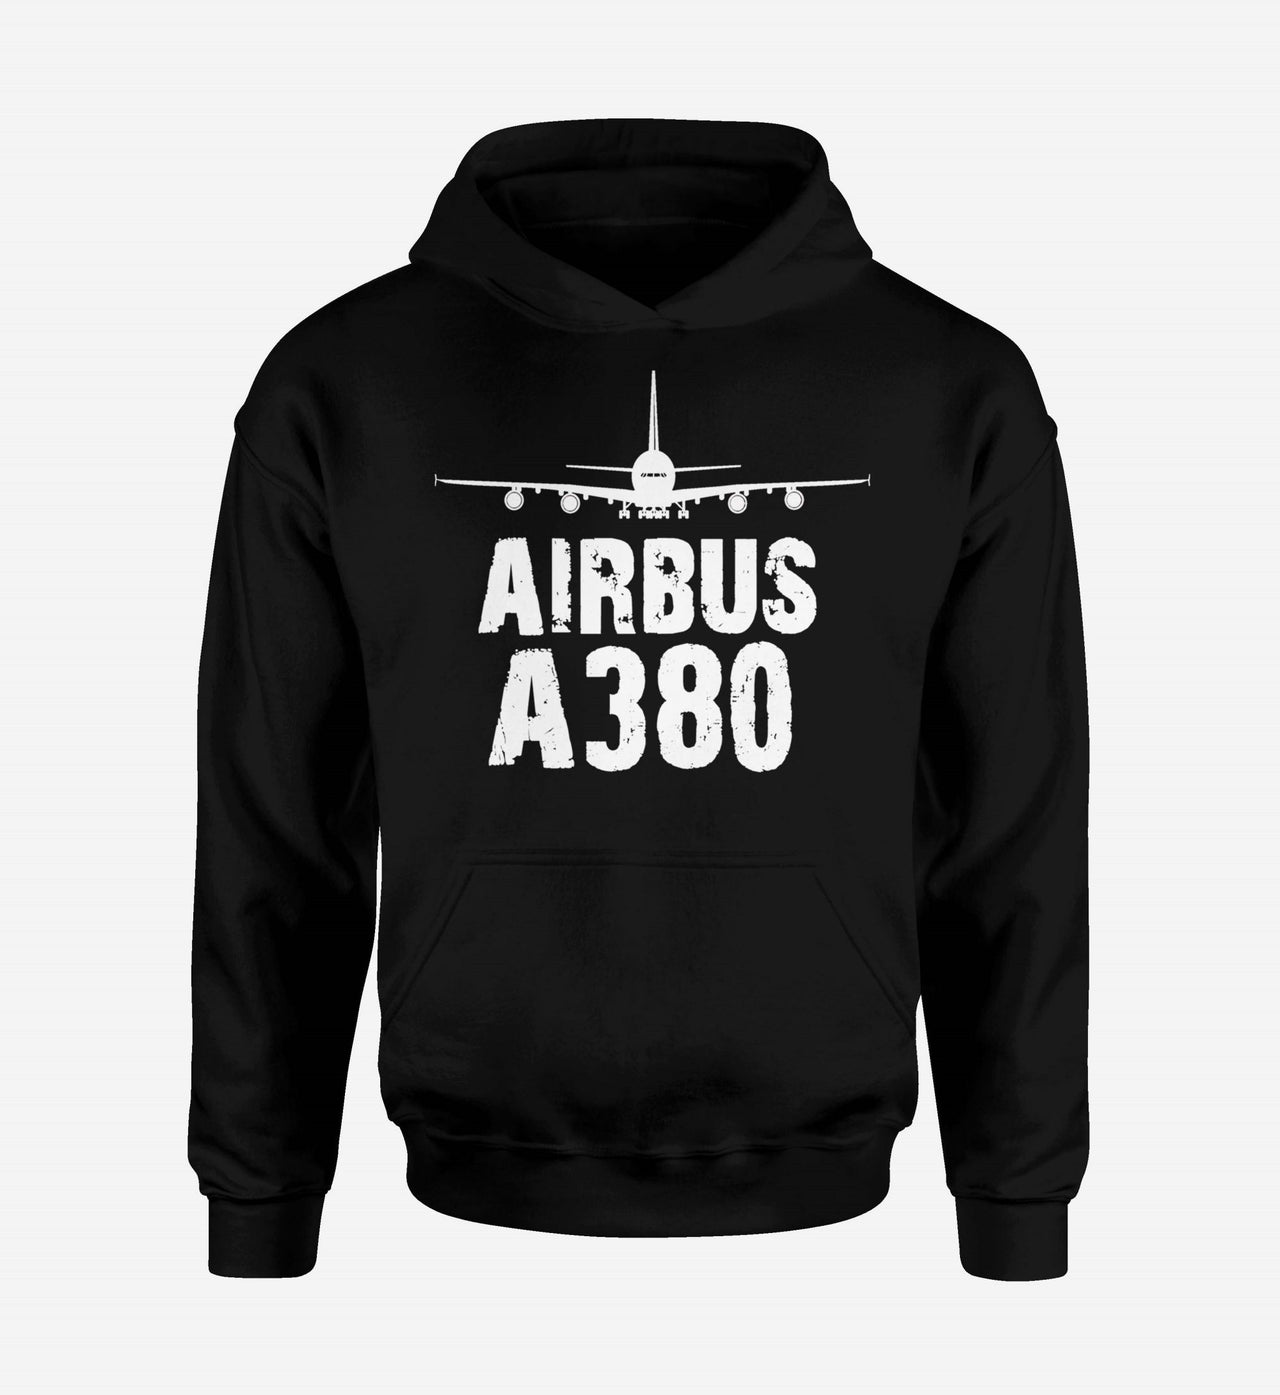 Airbus A380 & Plane Designed Hoodies